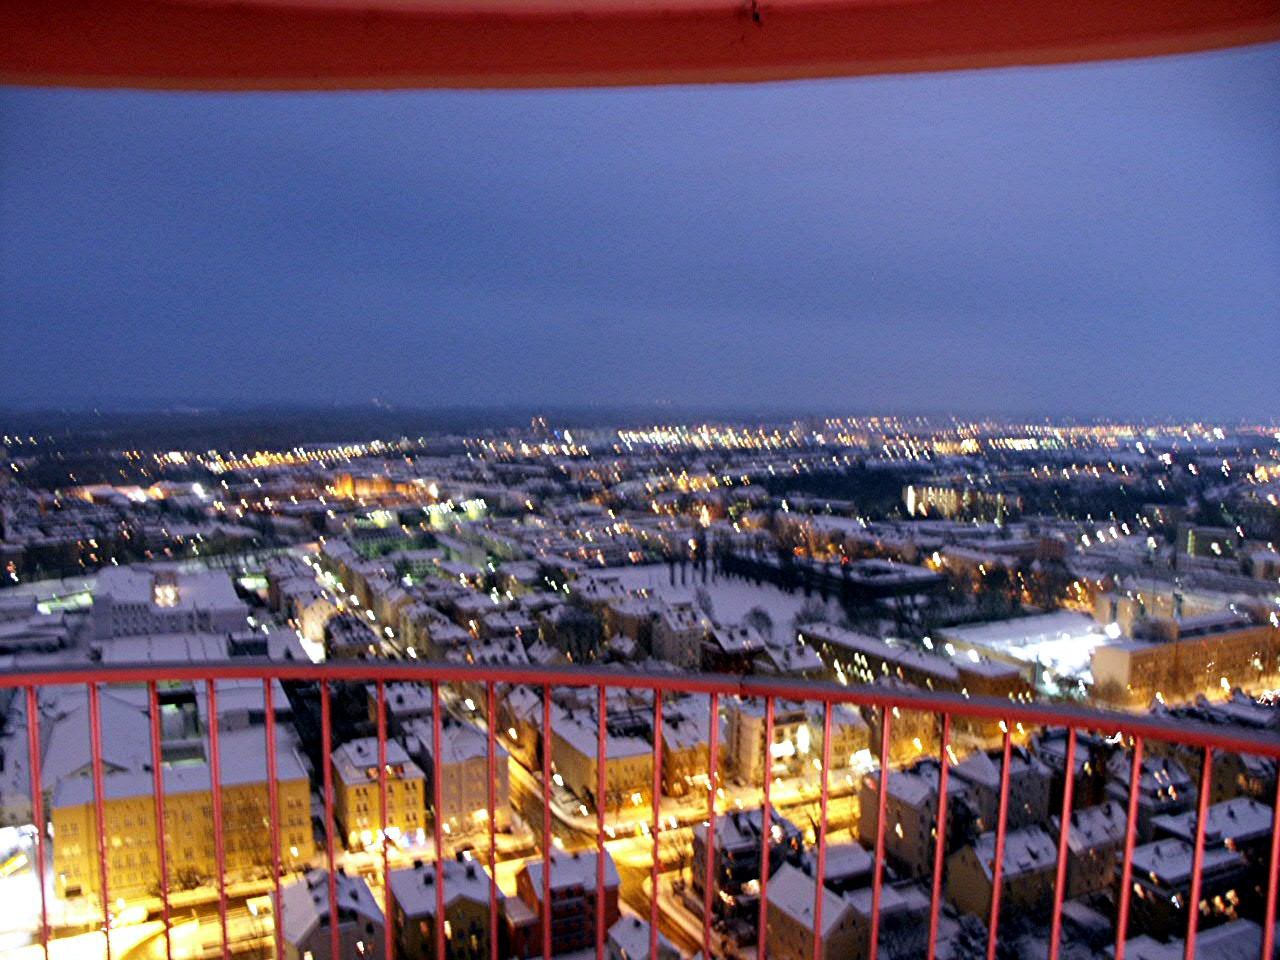 Hotelturm-Nacht-Panorama